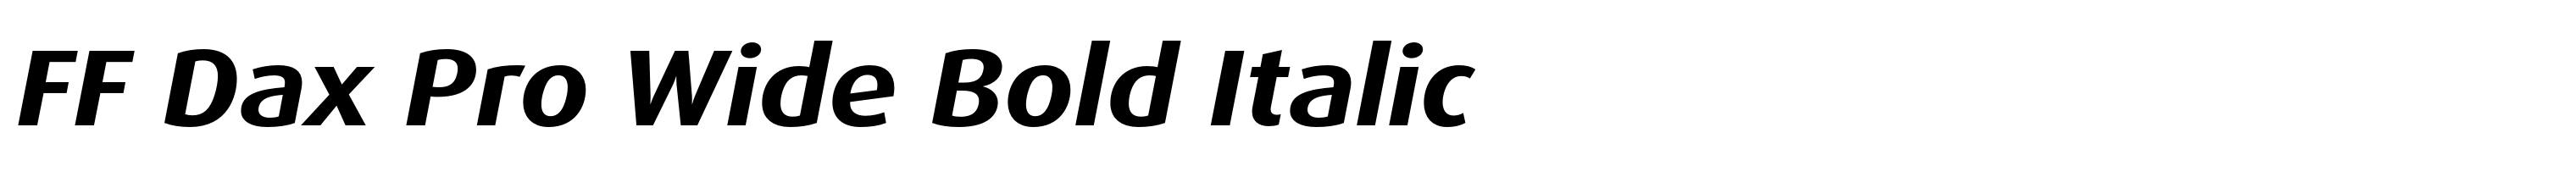 FF Dax Pro Wide Bold Italic